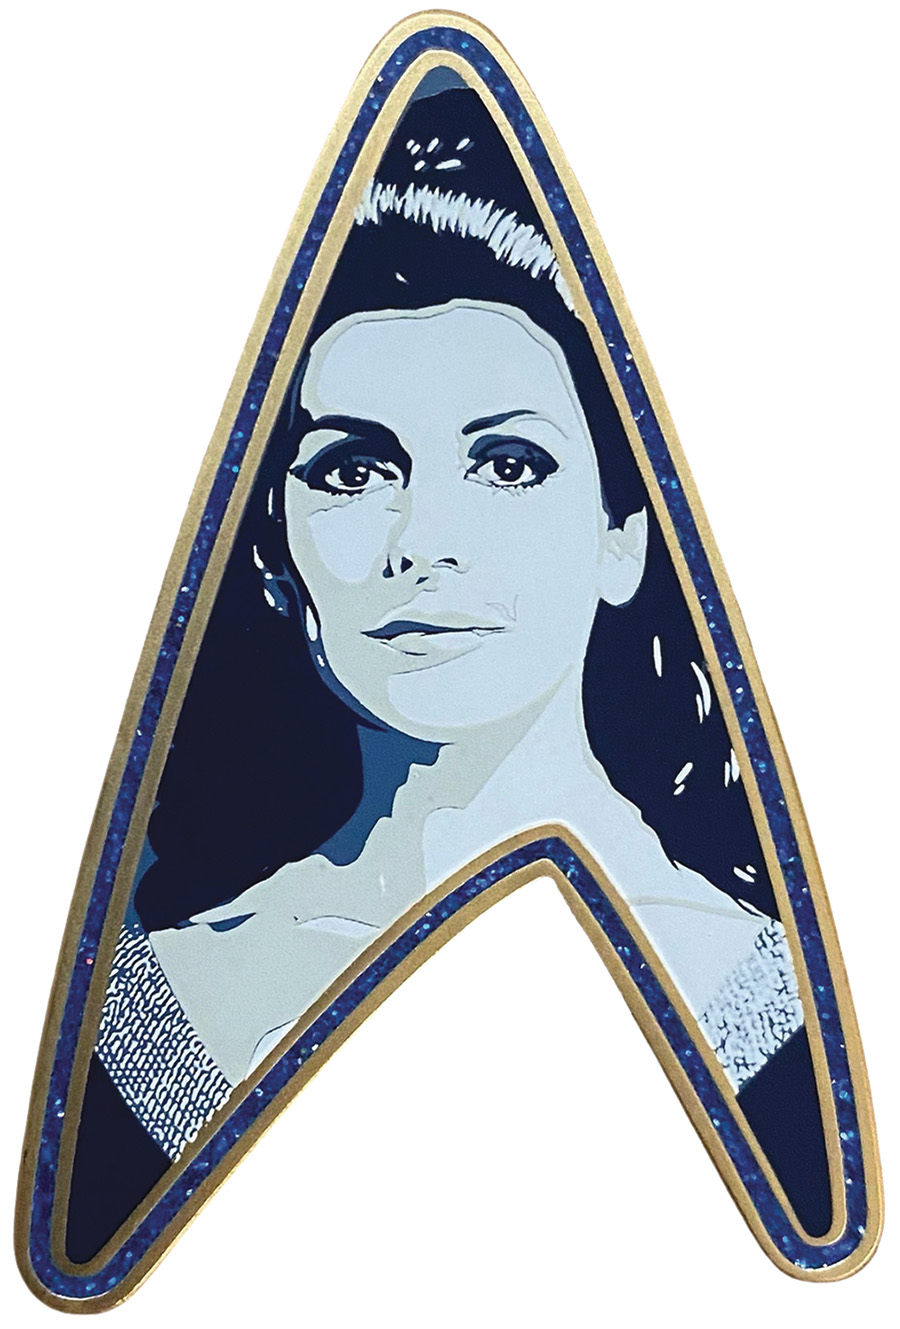 Star Trek The Next Generation Pin - Deanna Troi